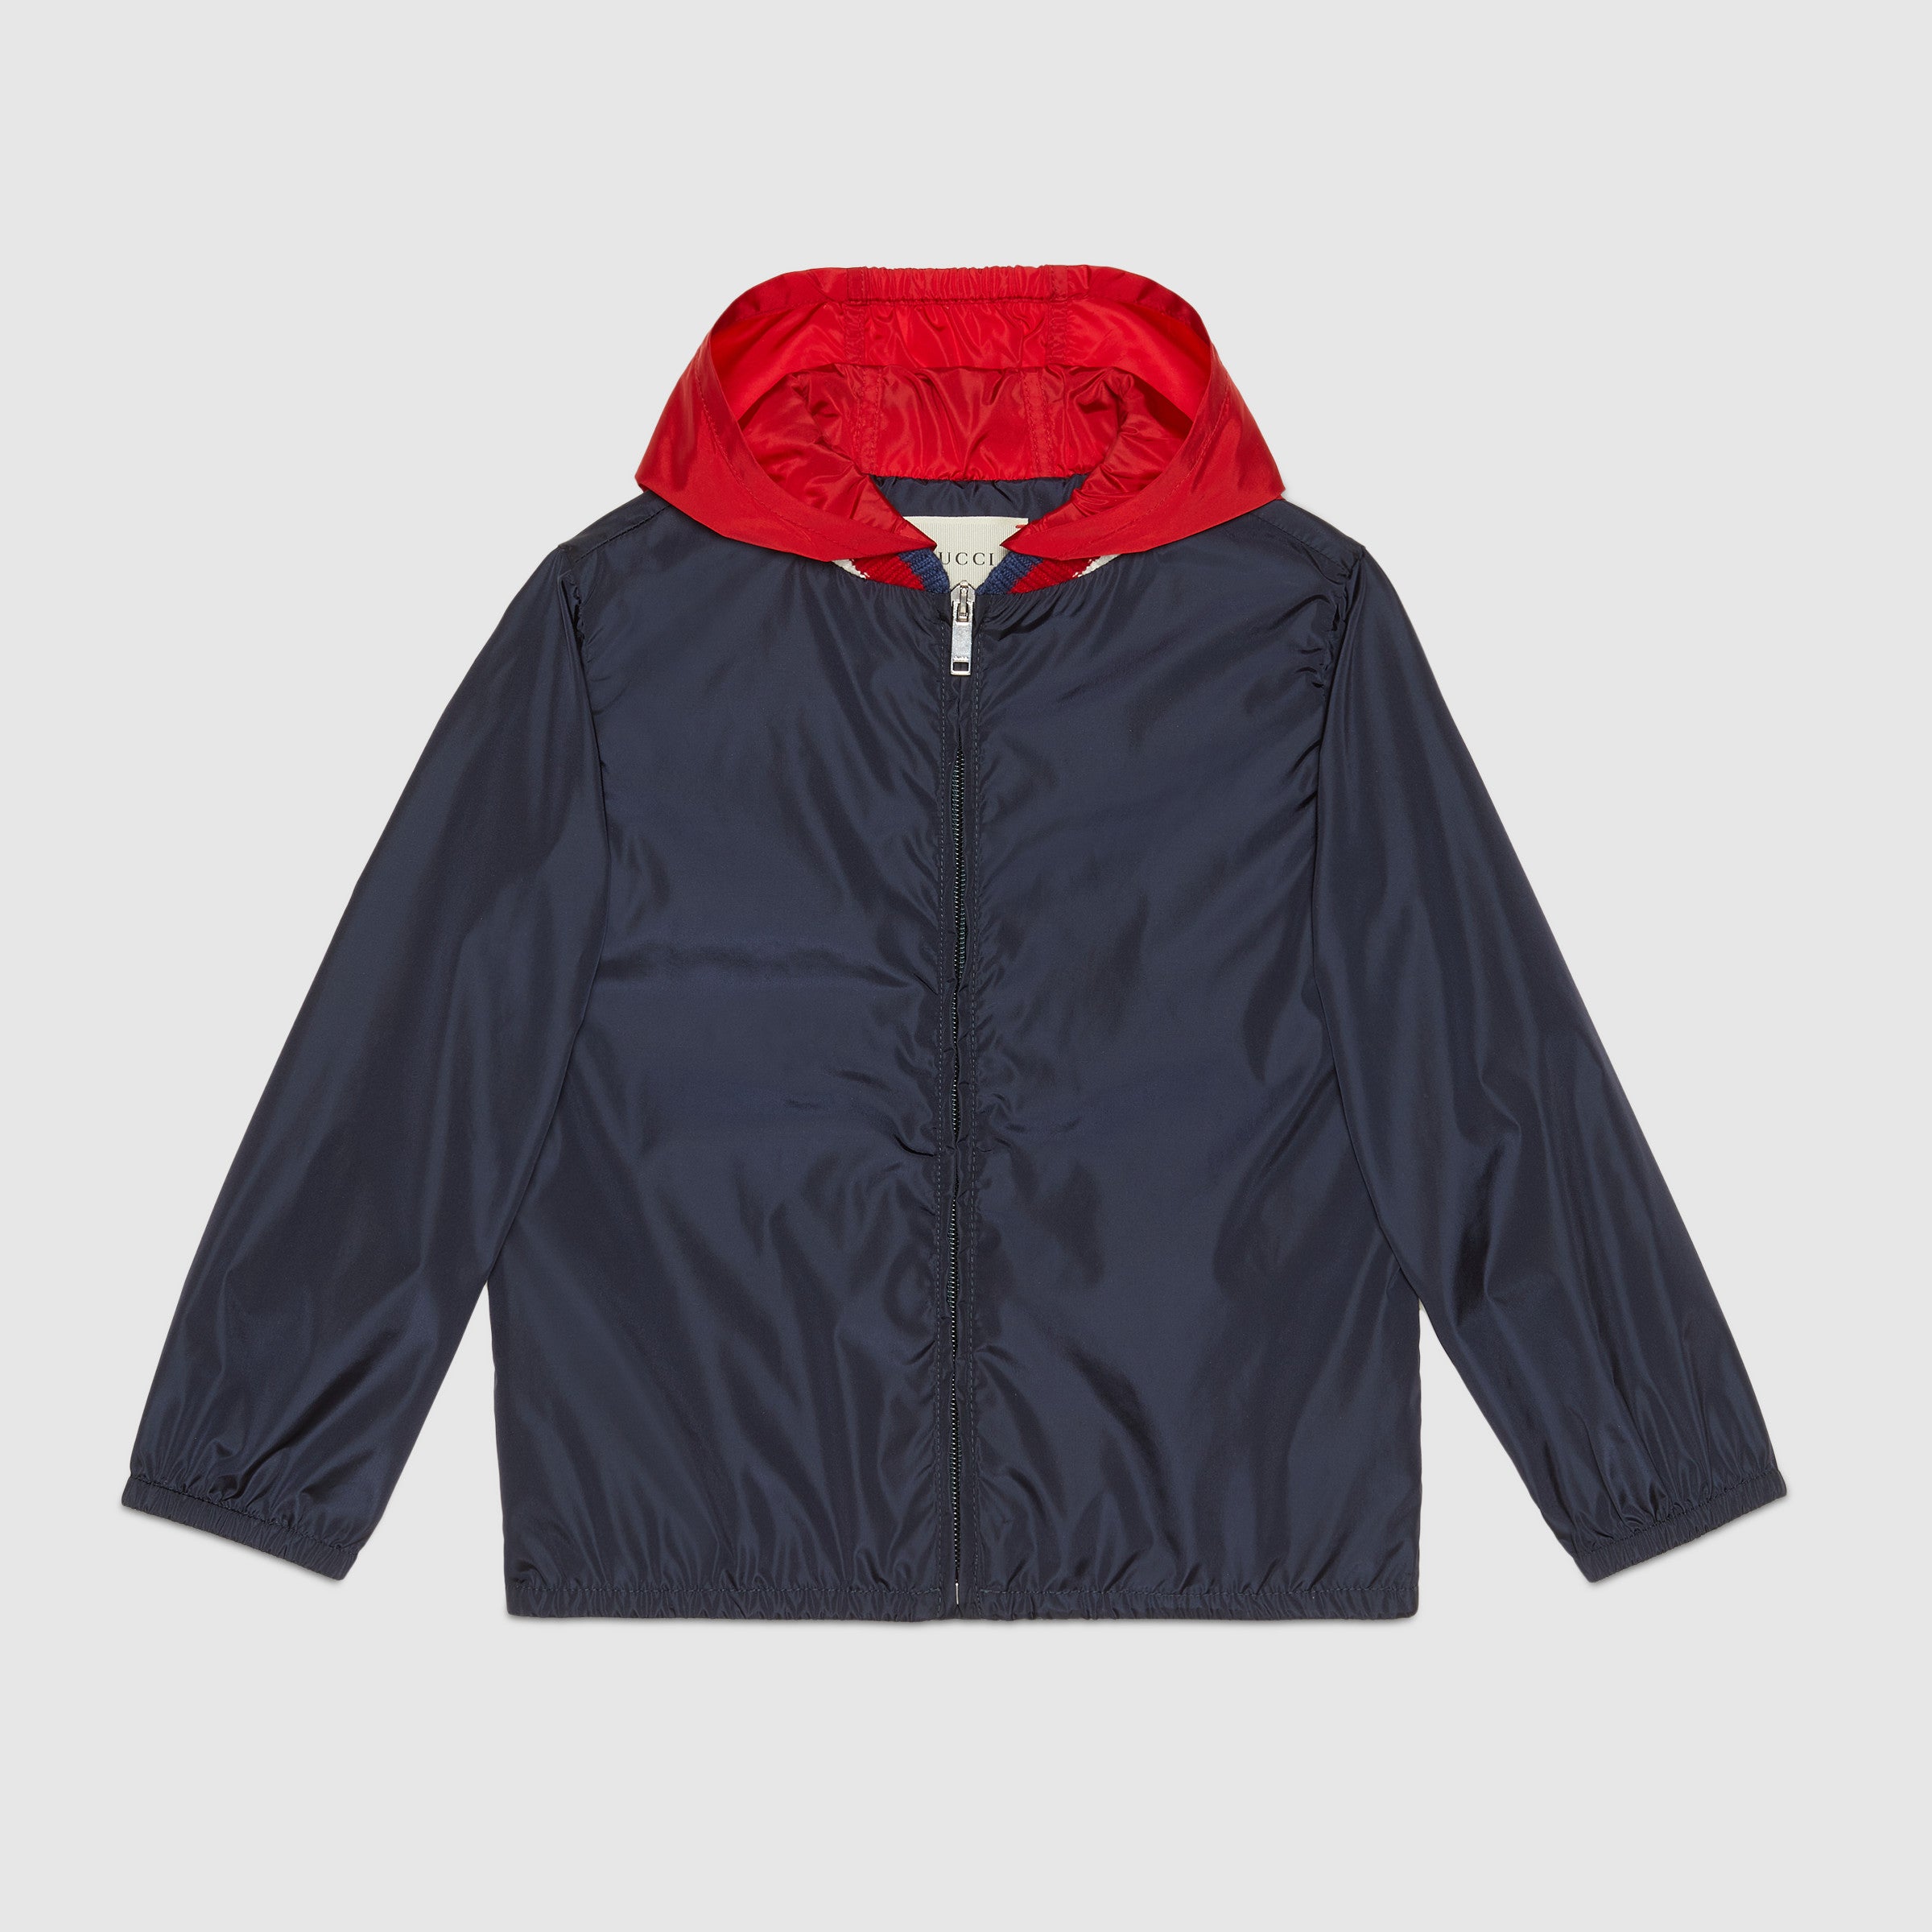 Boys Navy & Red Printed Coat